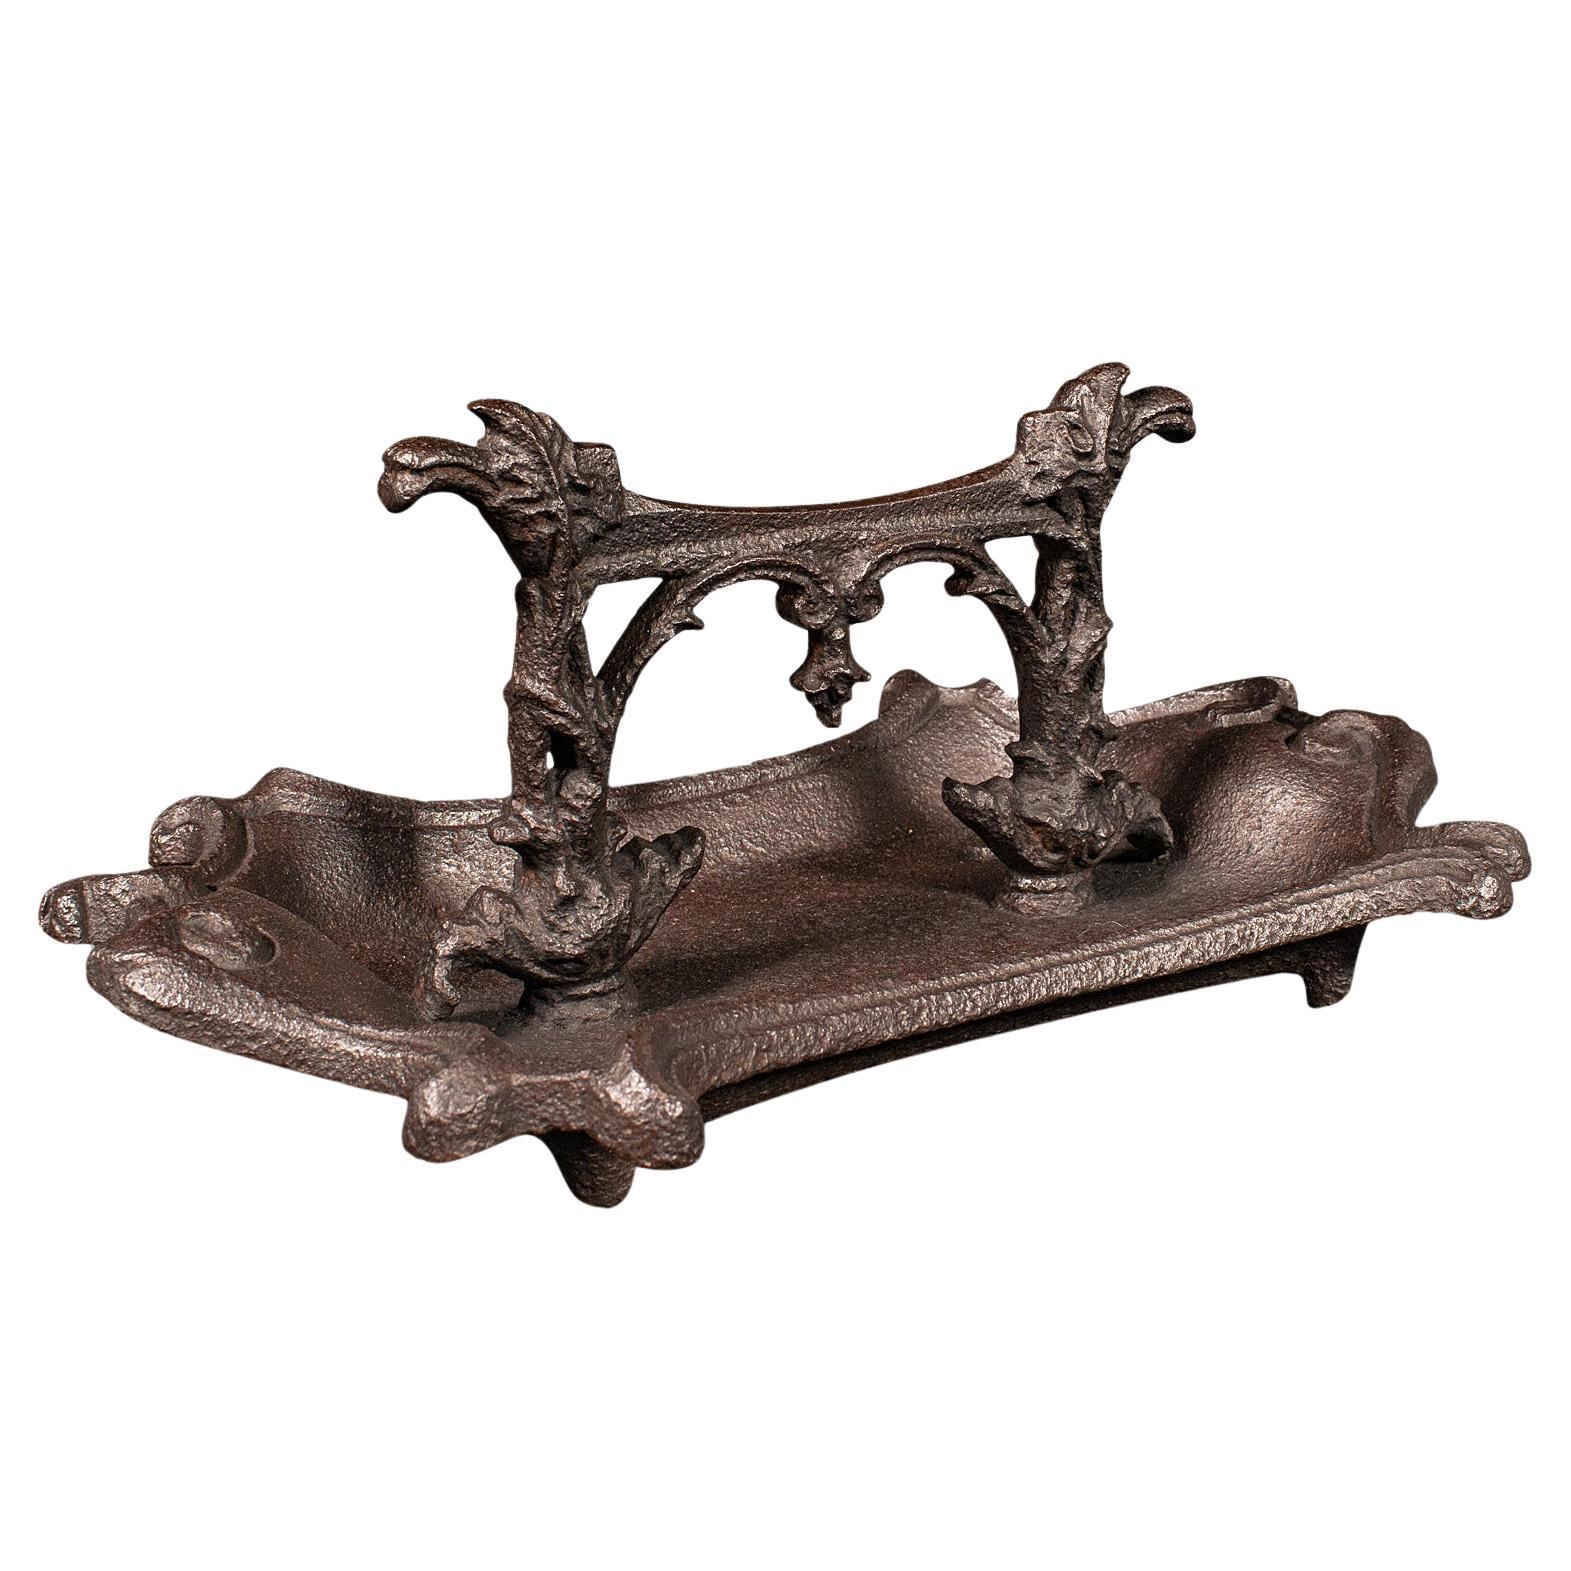 Antique Ornate Boot Scraper, English, Cast Iron, Shoe Pull, Victorian, C.1840